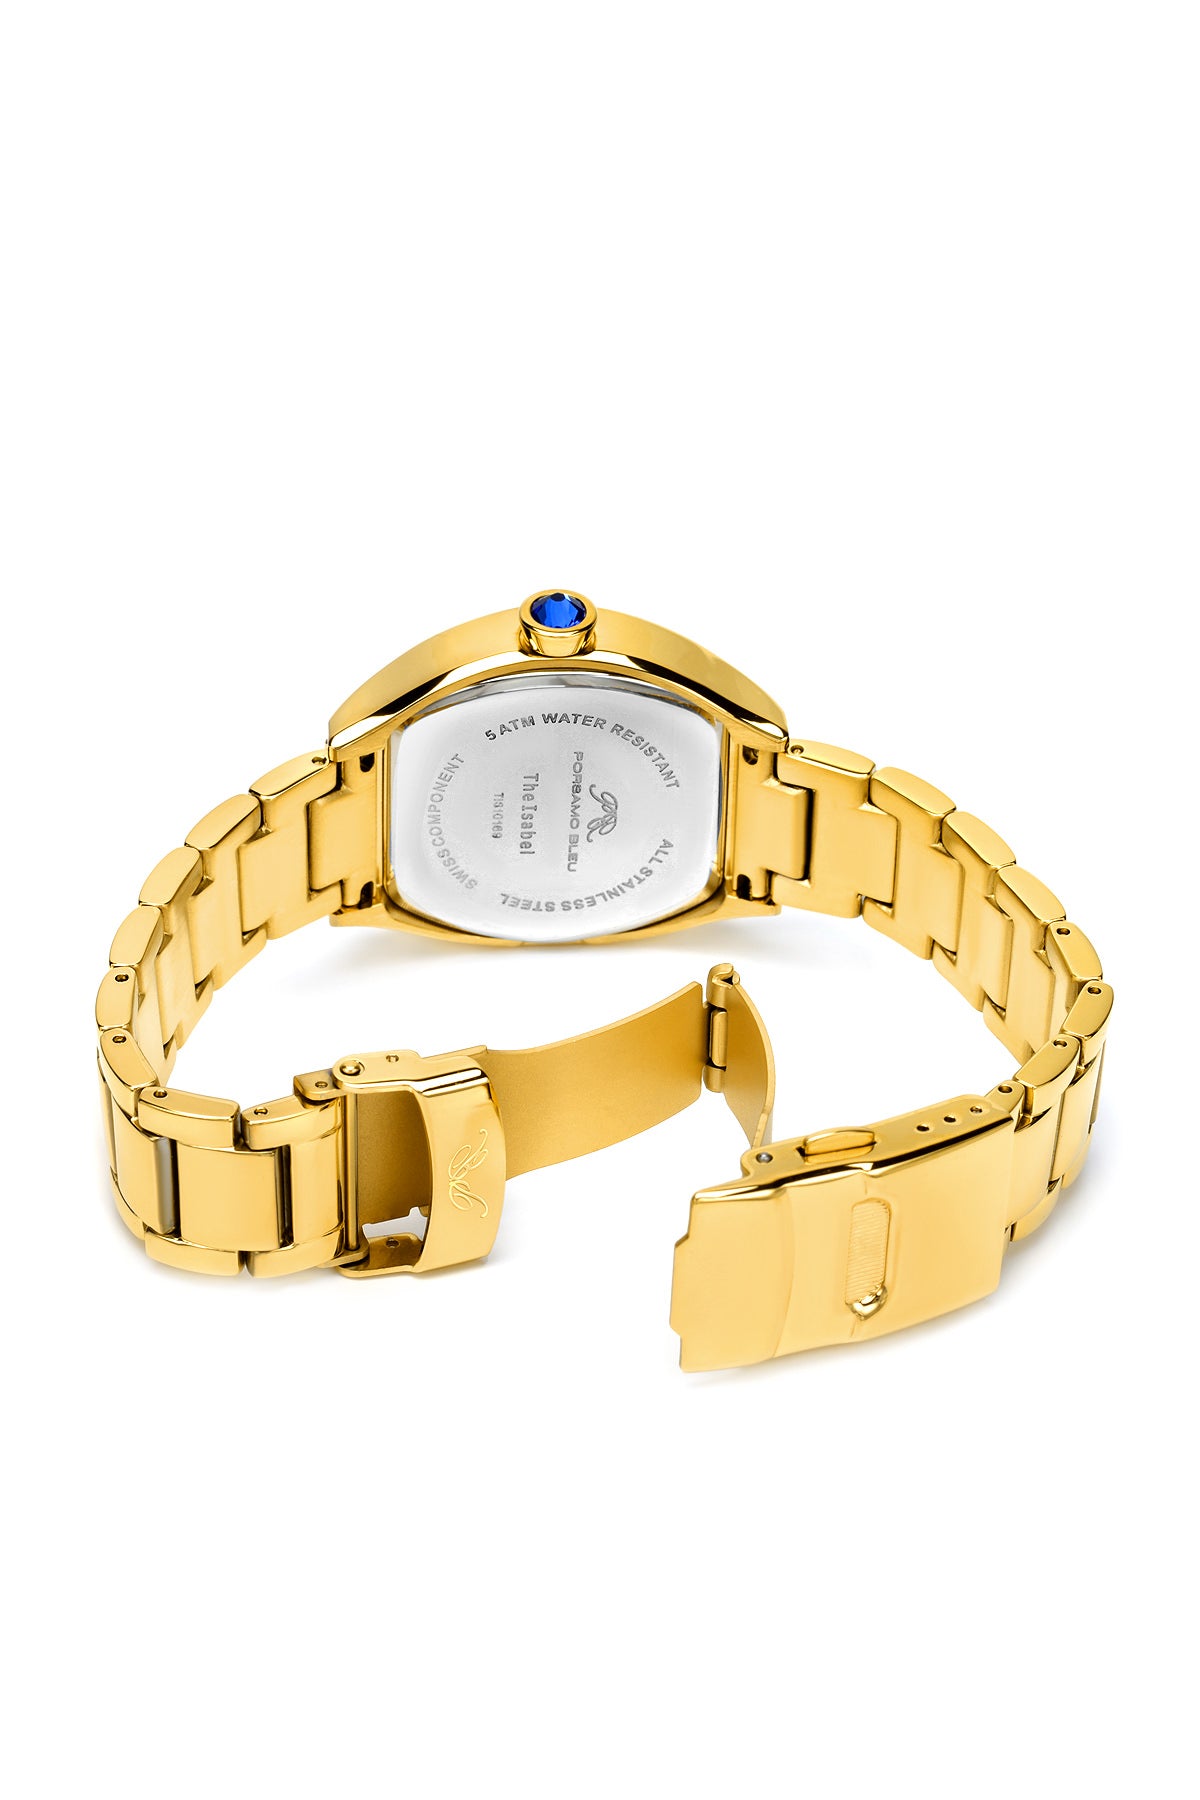 Porsamo Bleu Isabel luxury women's stainless steel watch, gold, white 182BISS